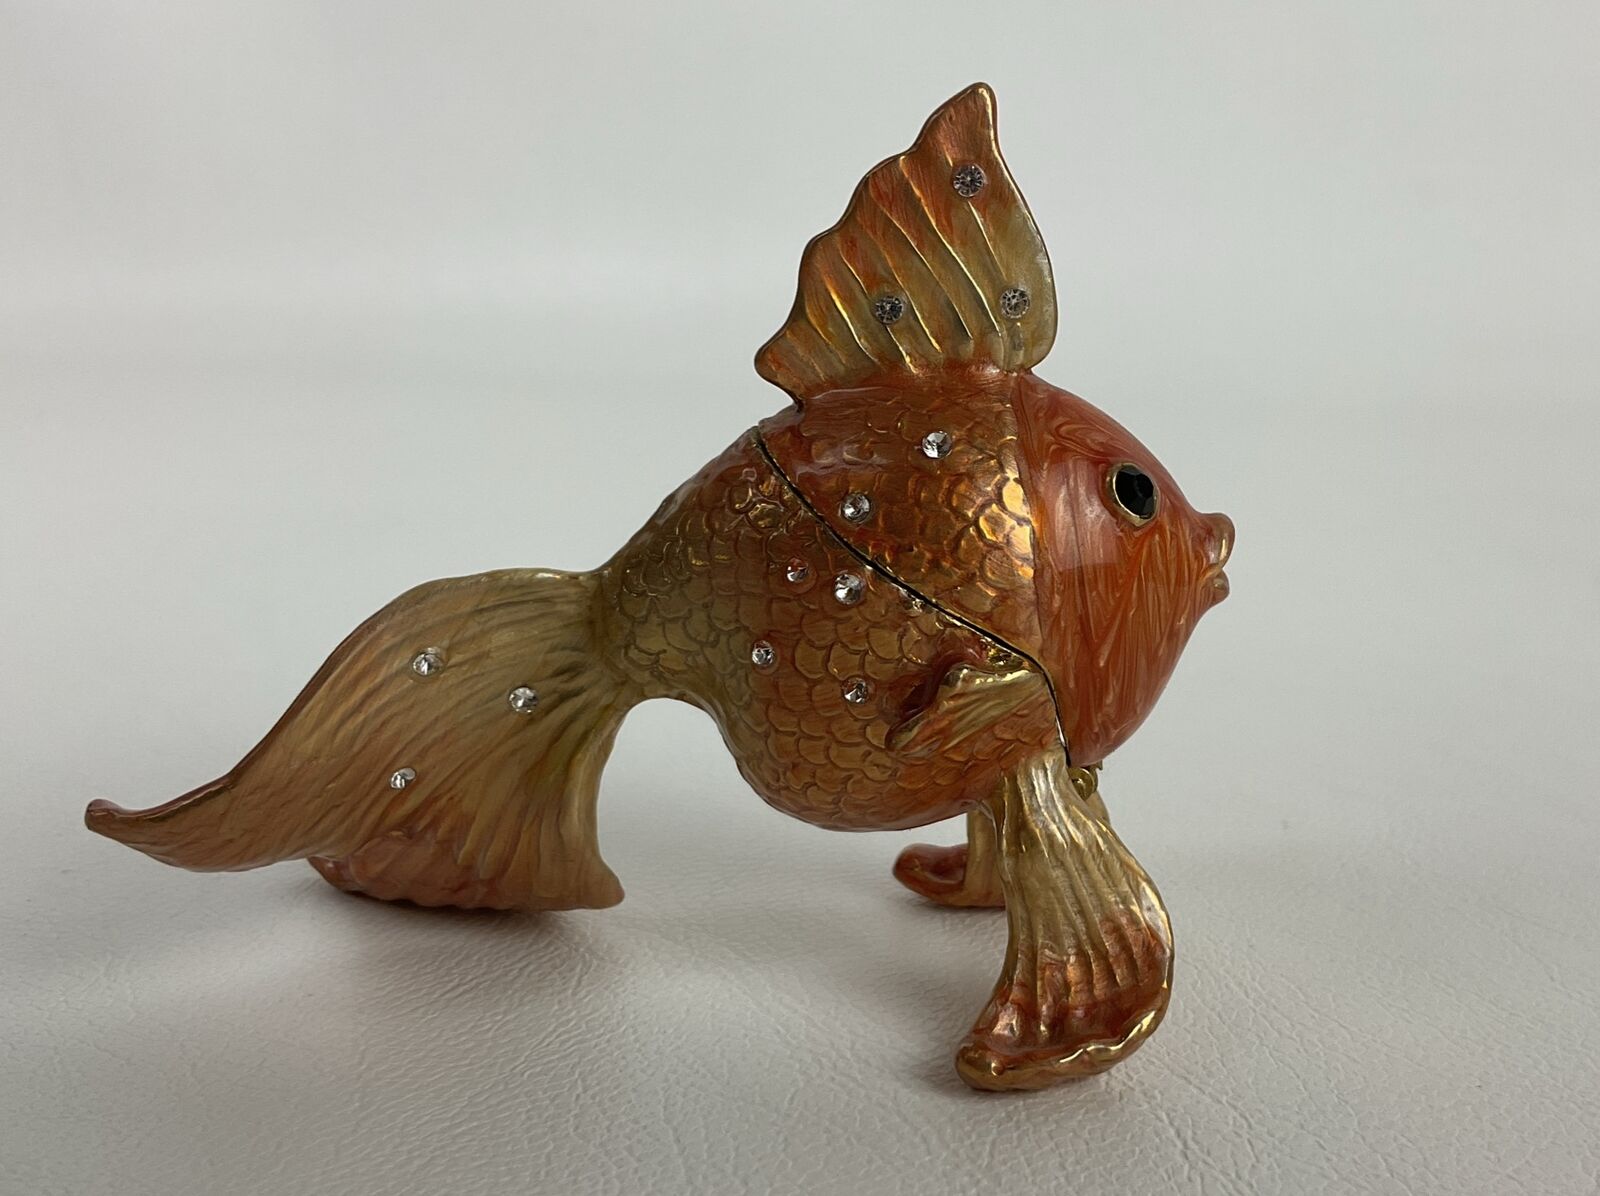 Keren Kopal Small Betta gold Fish Trinket Box Decorated with Austrian Crystals